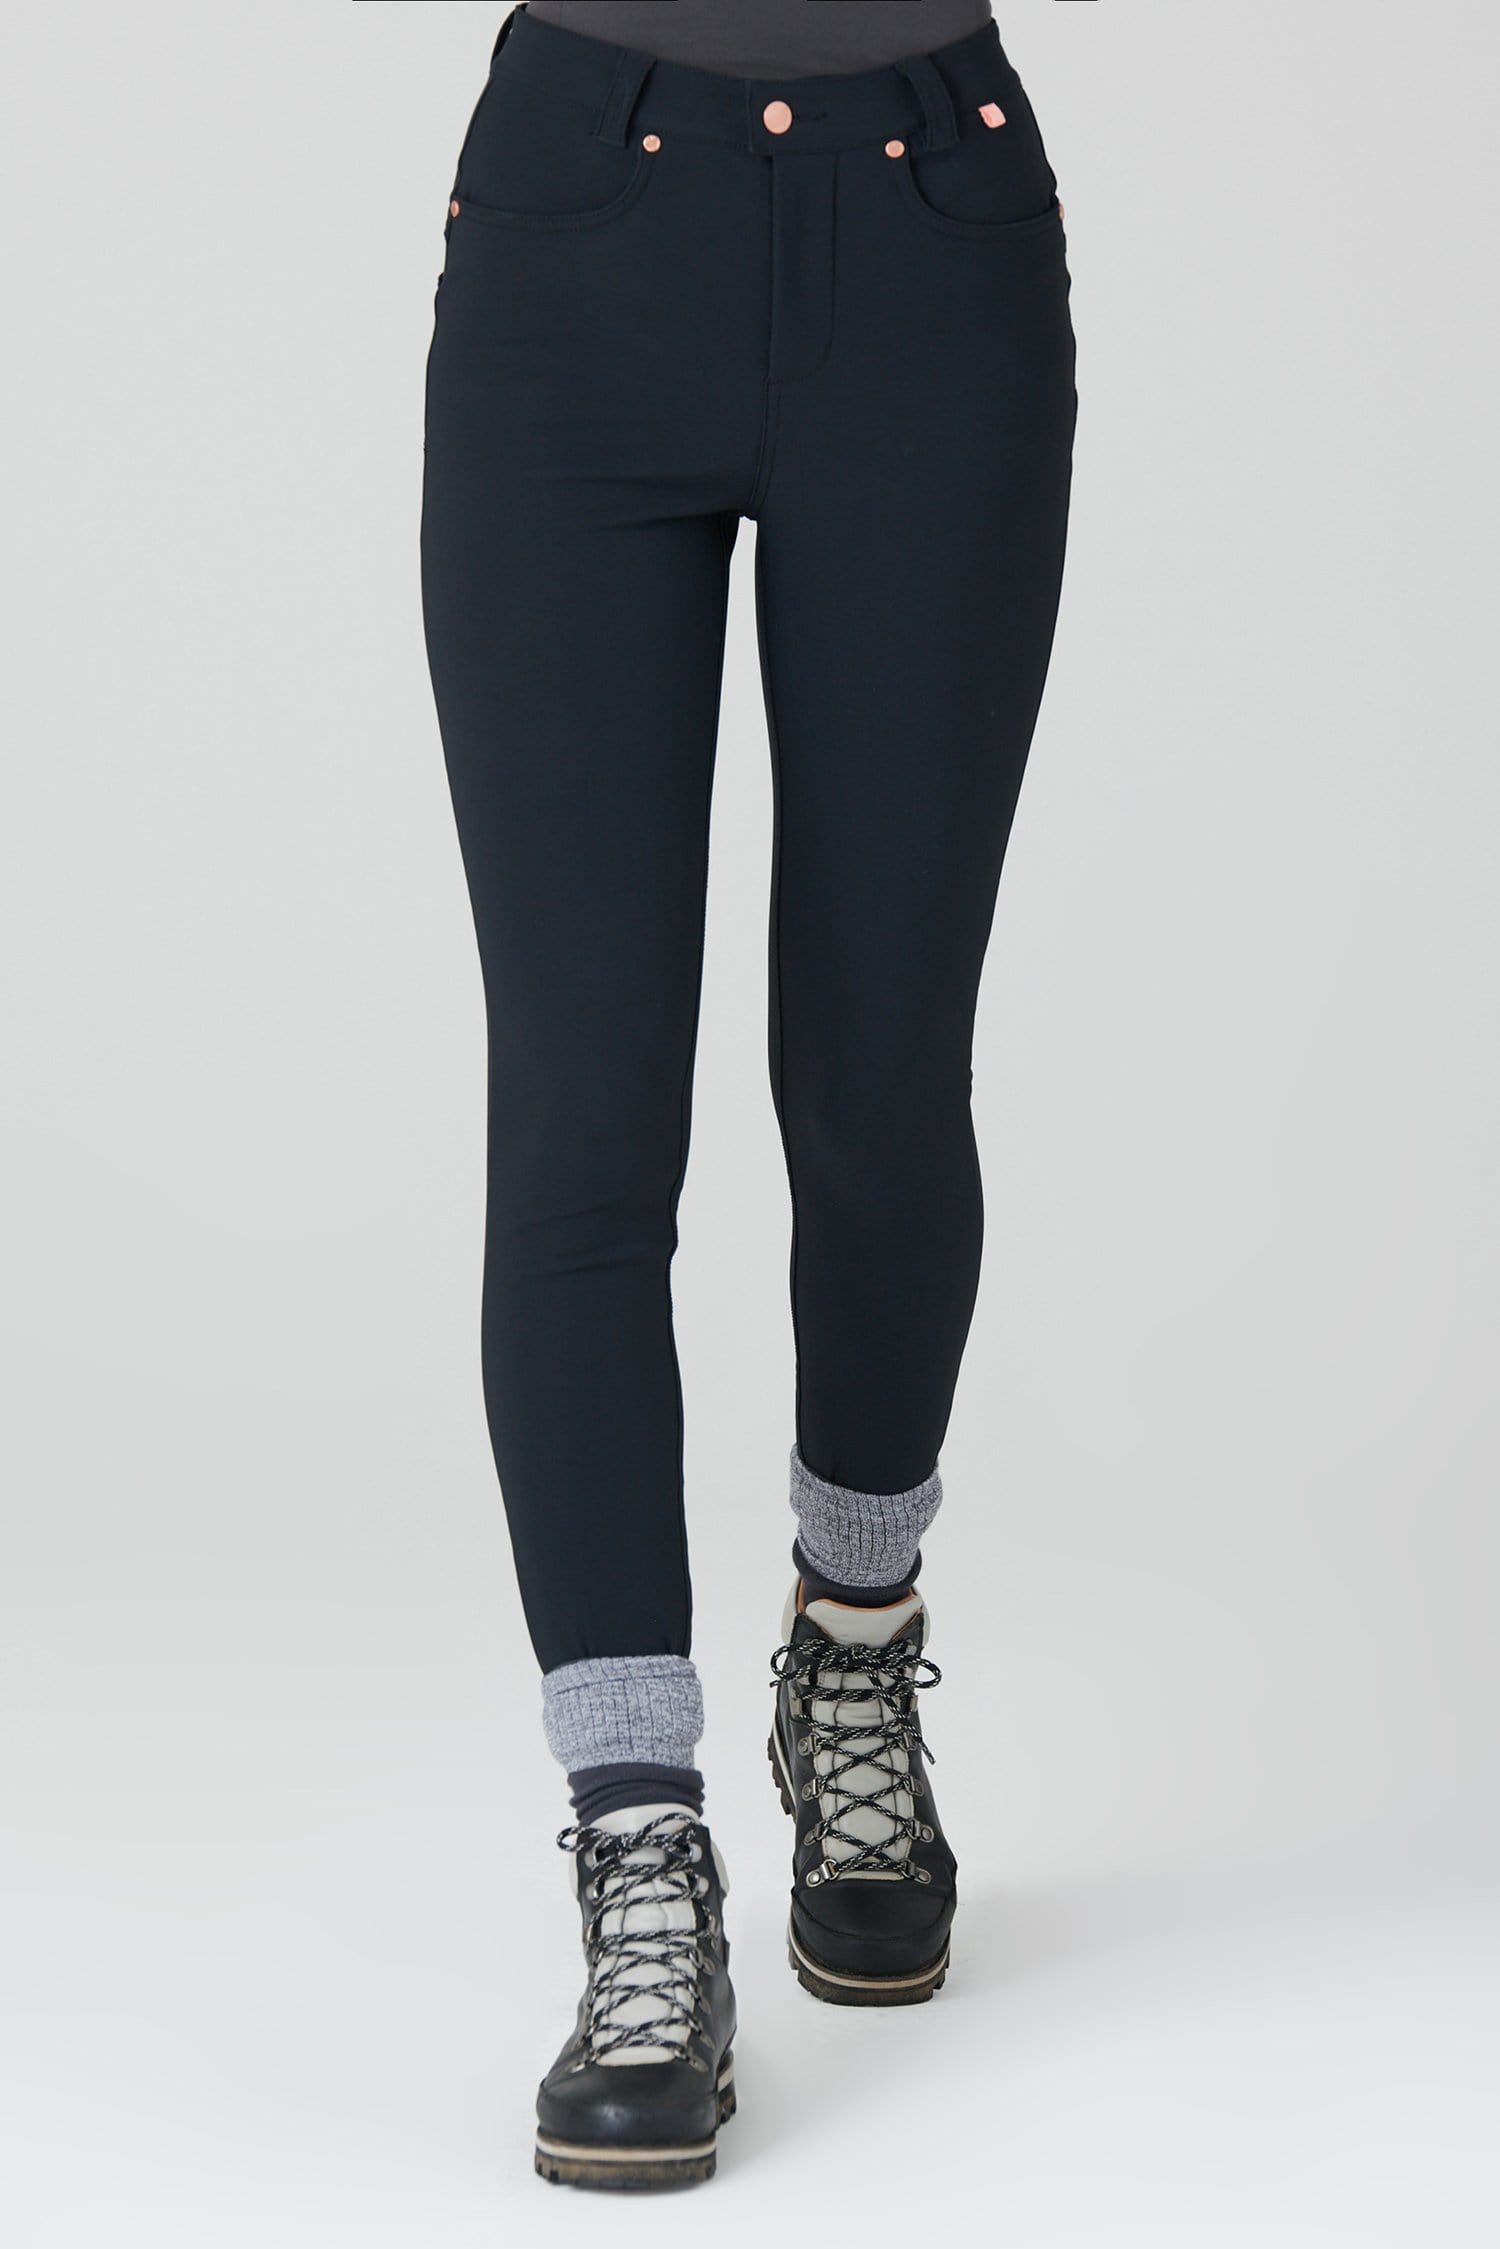 The Aventurite Stretch Skinny Outdoor Trousers - Black - 26p / Uk8 - Womens - Acai Outdoorwear